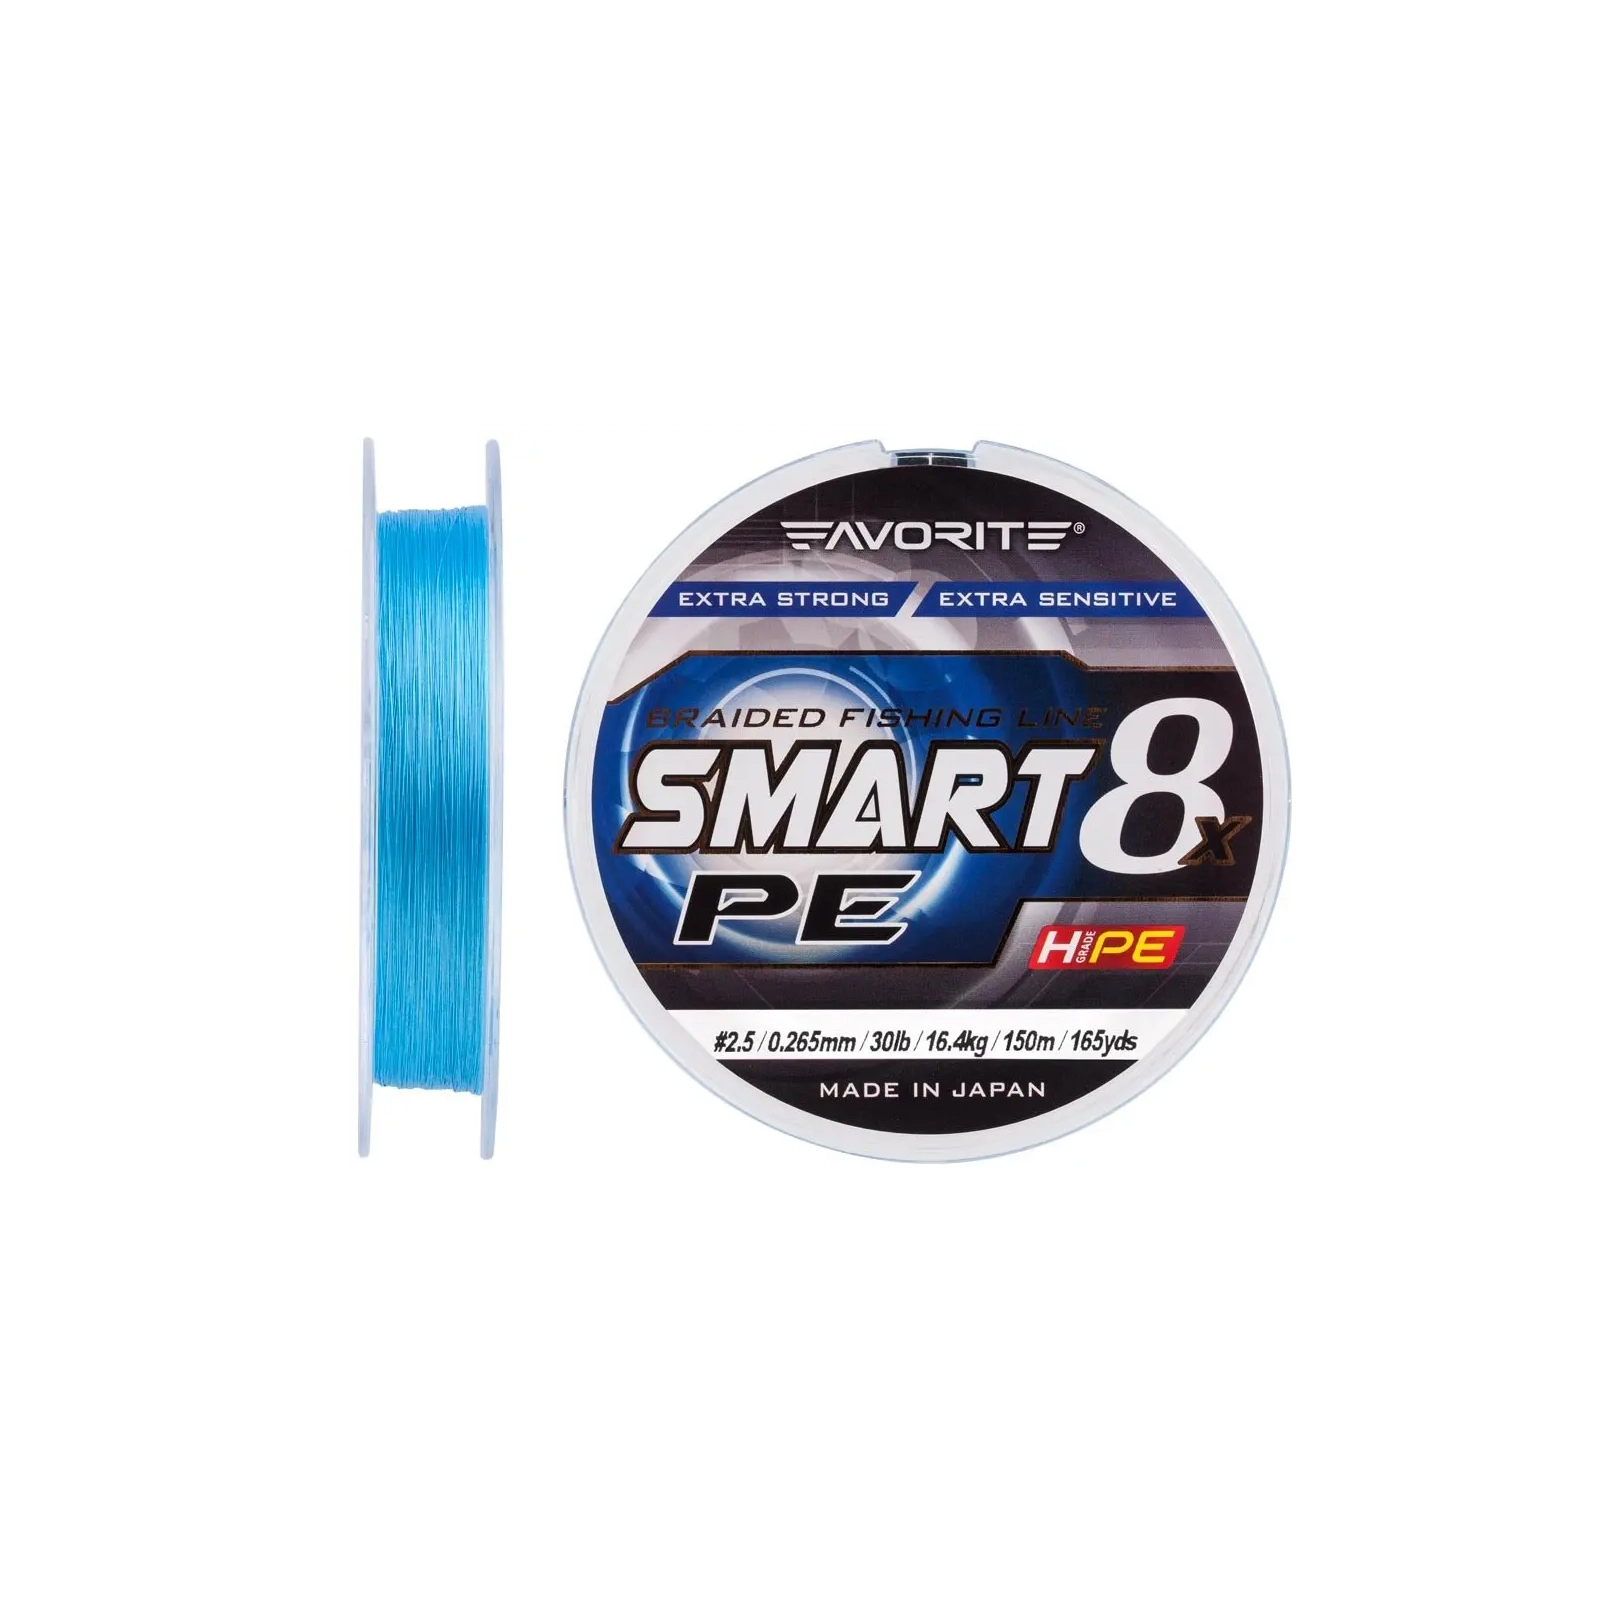 Шнур Favorite Smart PE 8x 150м 2.5/0.265mm 30lb/16.4kg Sky Blue (1693.10.77) изображение 2